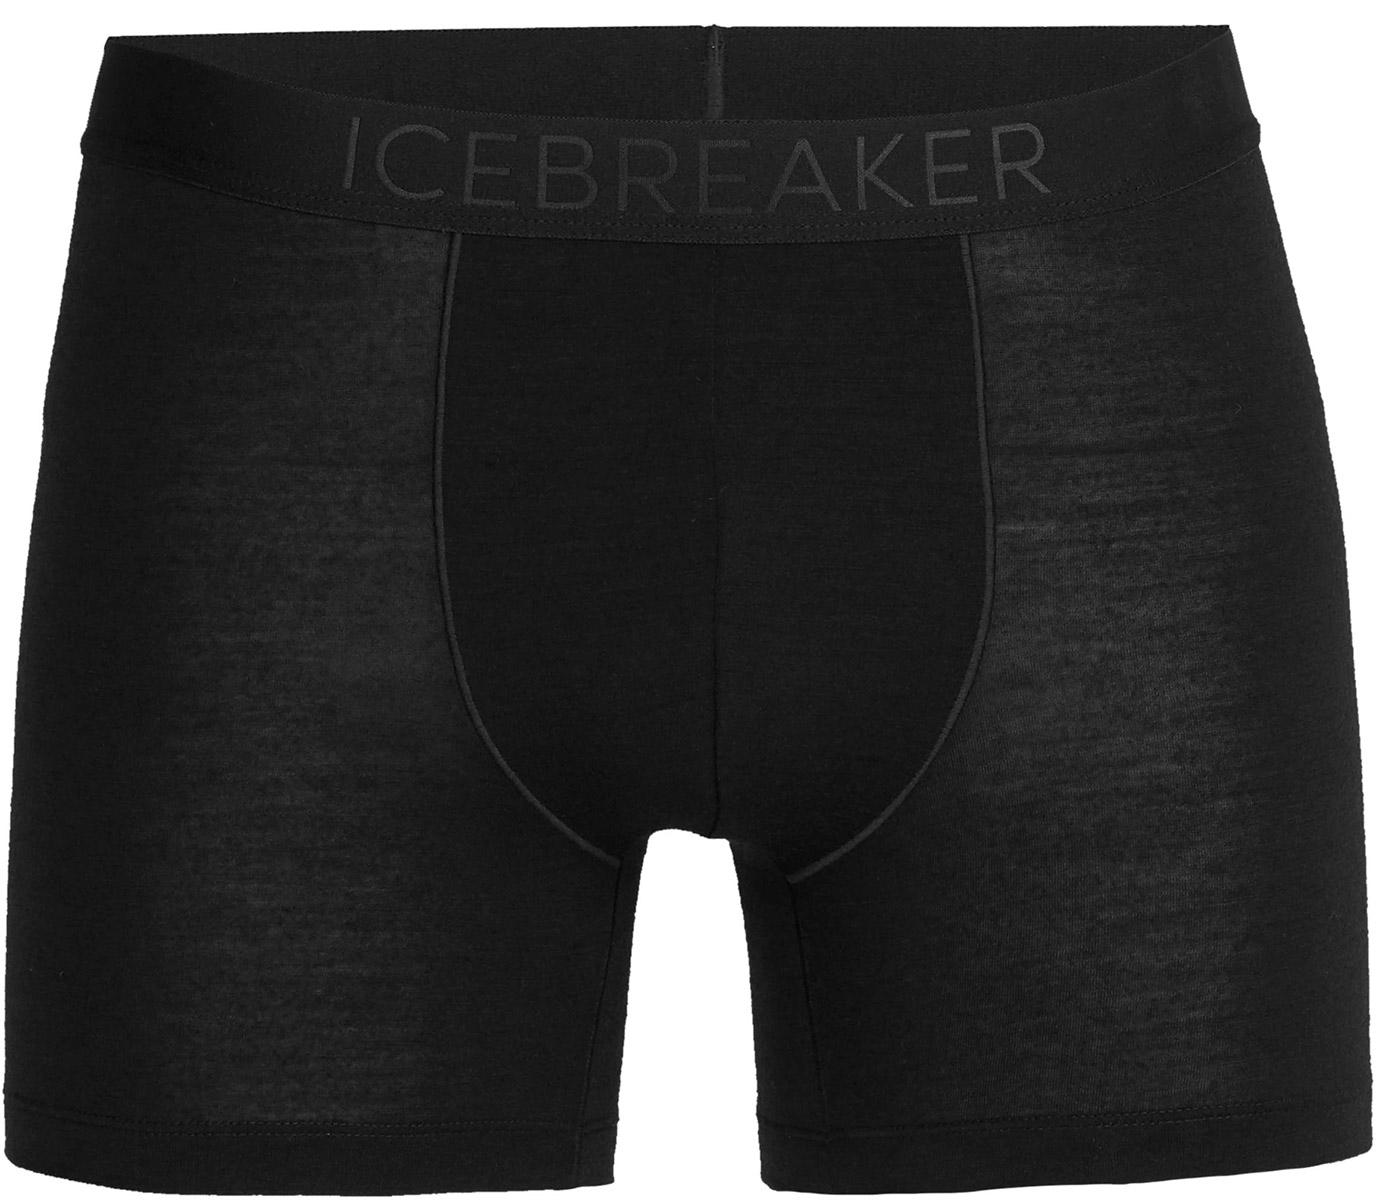 Icebreaker Anatomica Cool-lite Boxers Ss20  Black